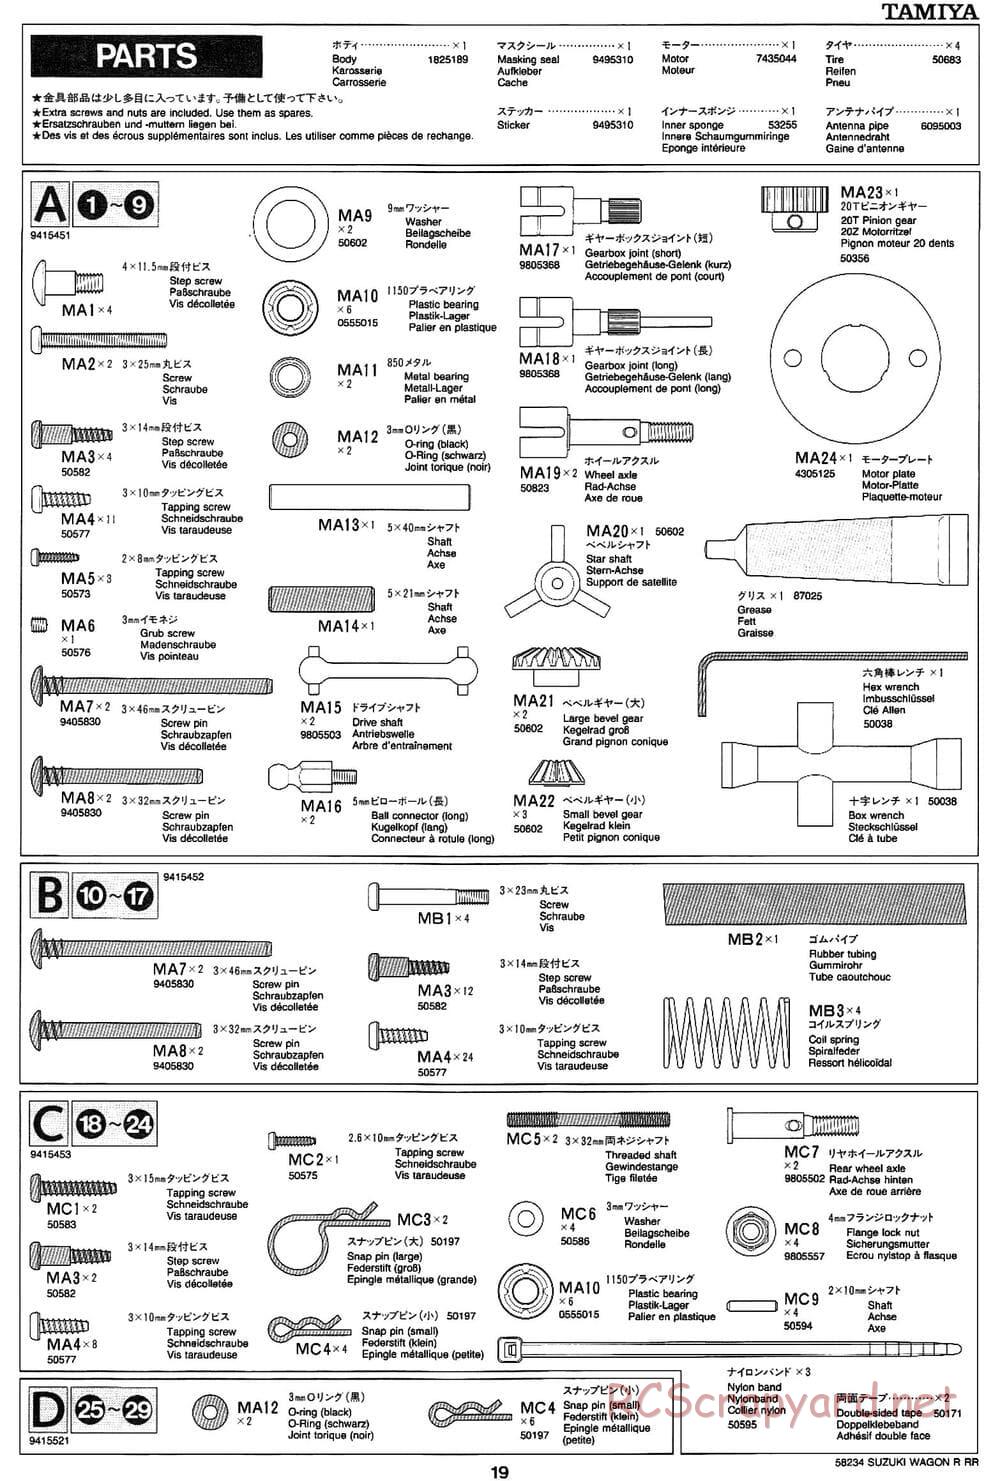 Tamiya - Suzuki WagonR-RR - M03 Chassis - Manual - Page 19